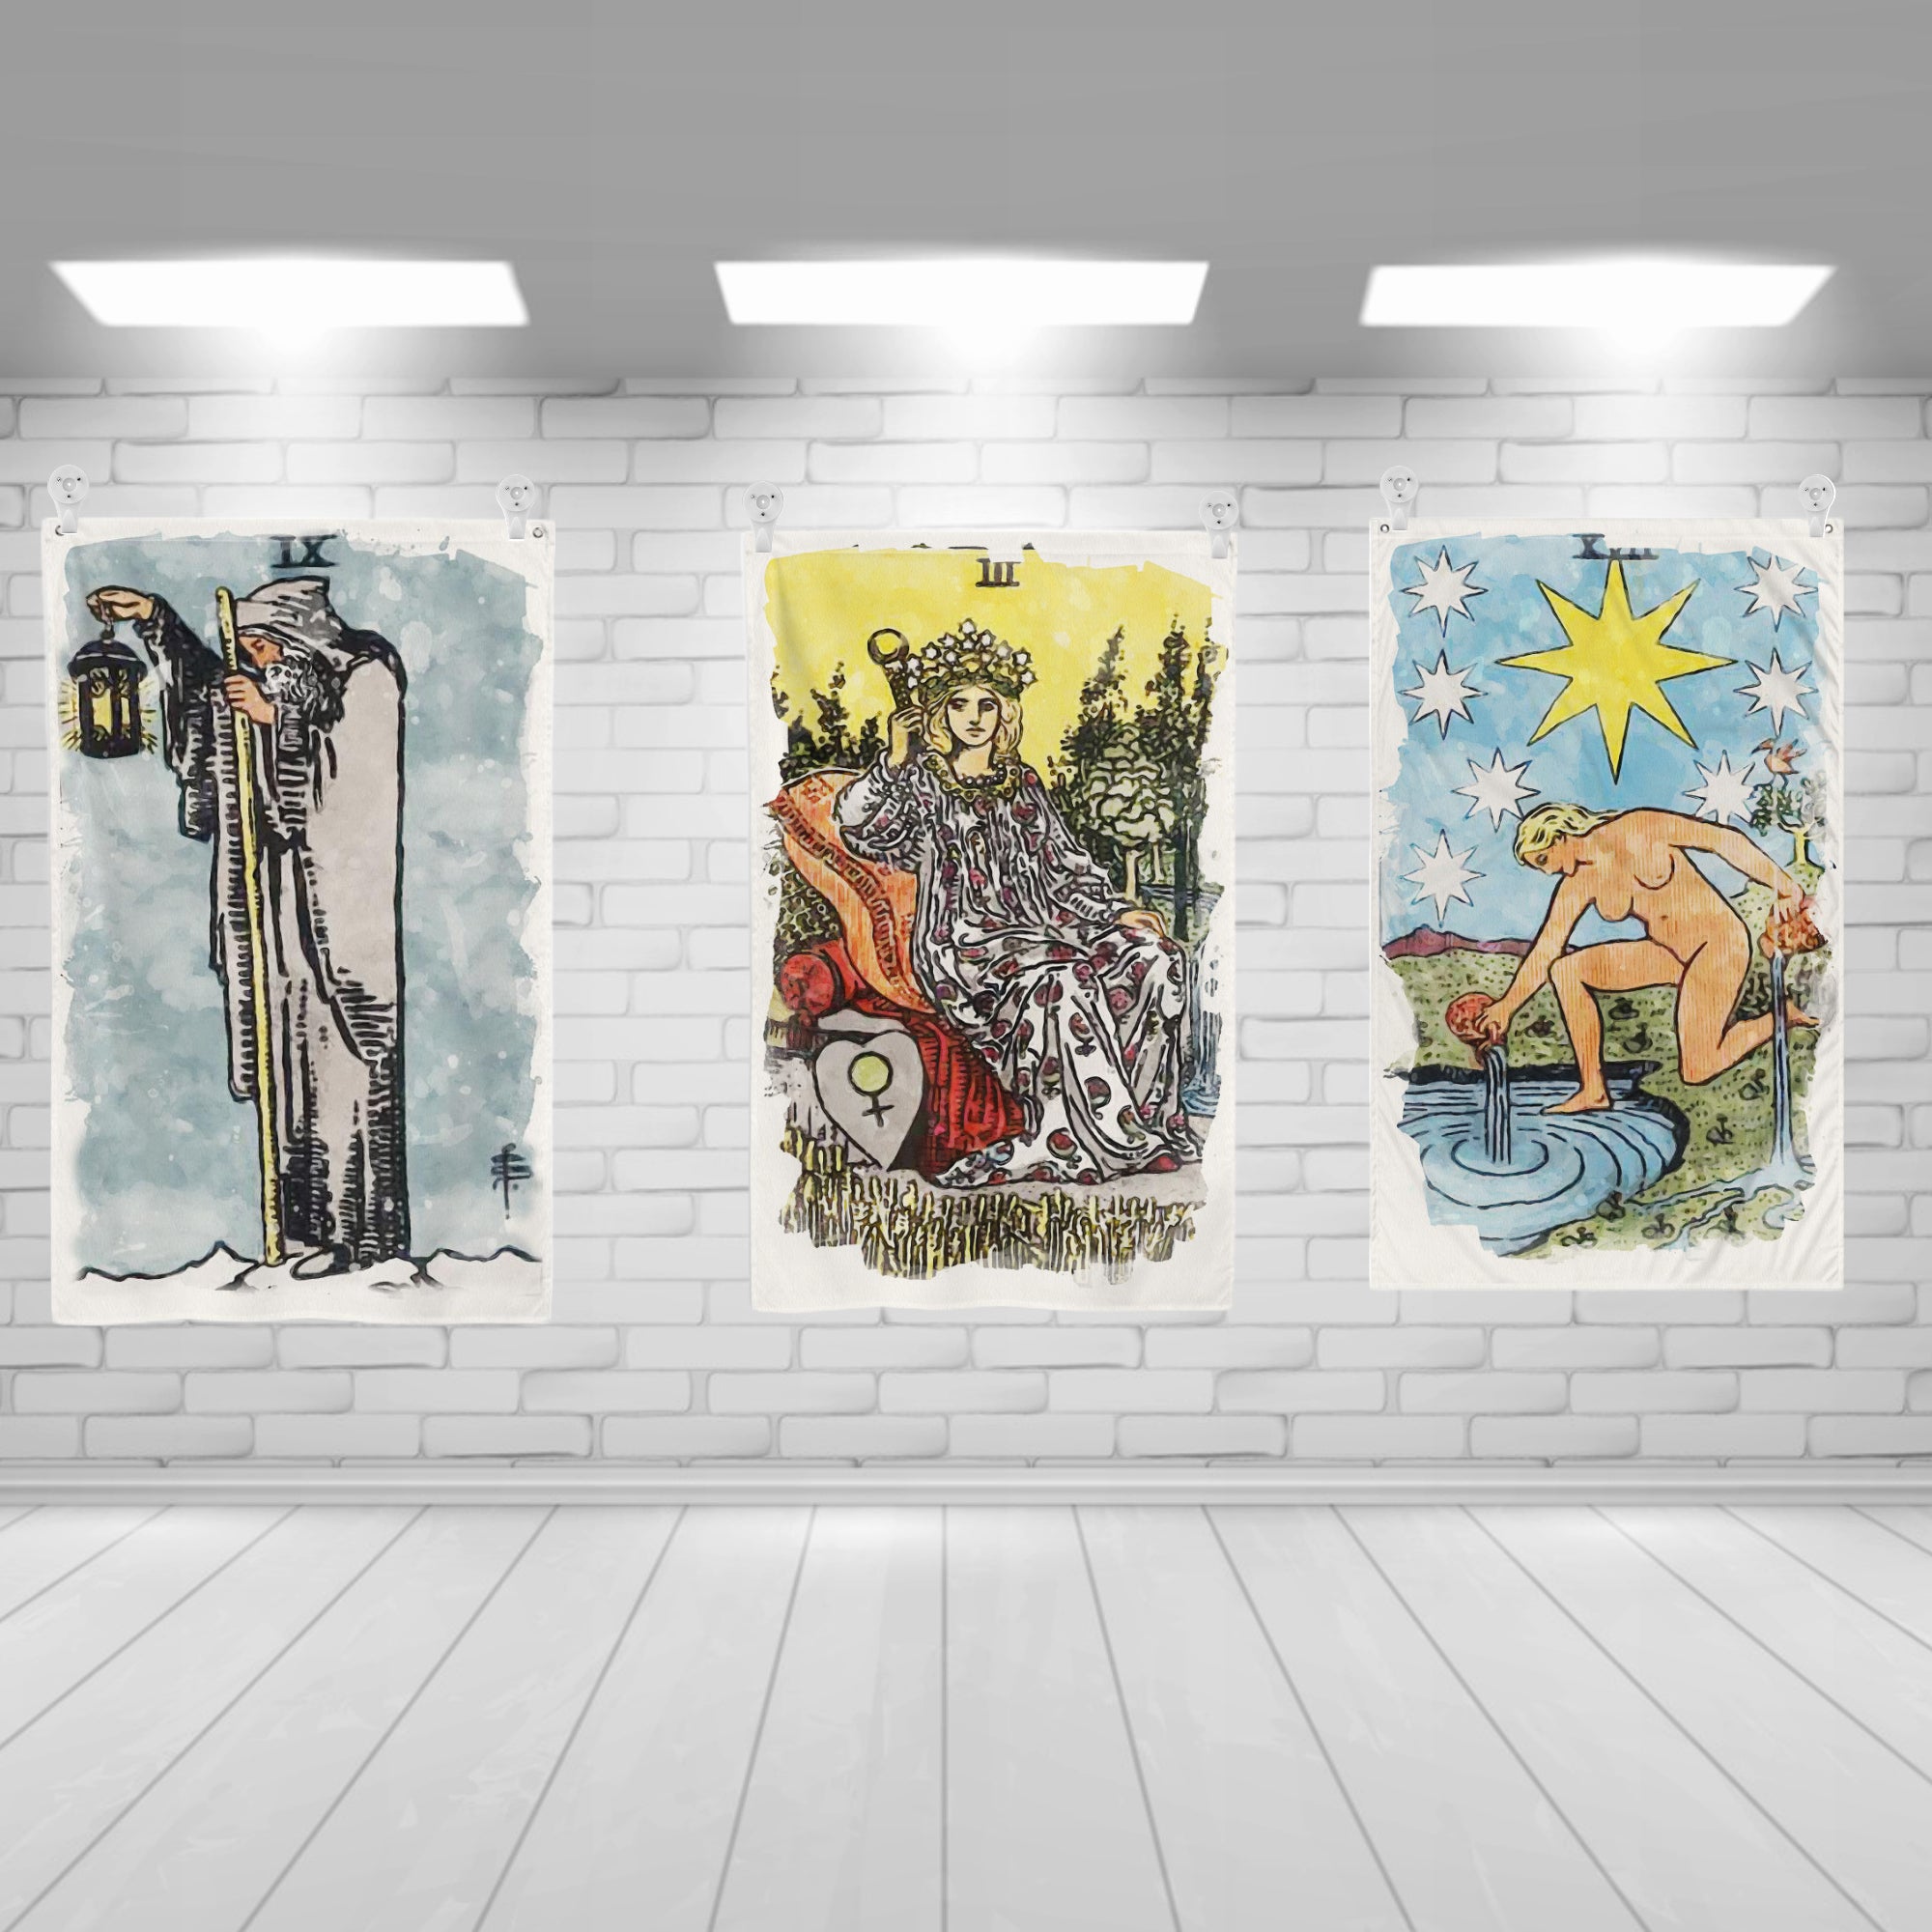 Tarot Tapestry | Wall Art Flags Of Major Arcana Tarot Cards | Wall Hanging Premium Fabric With Installation Kit